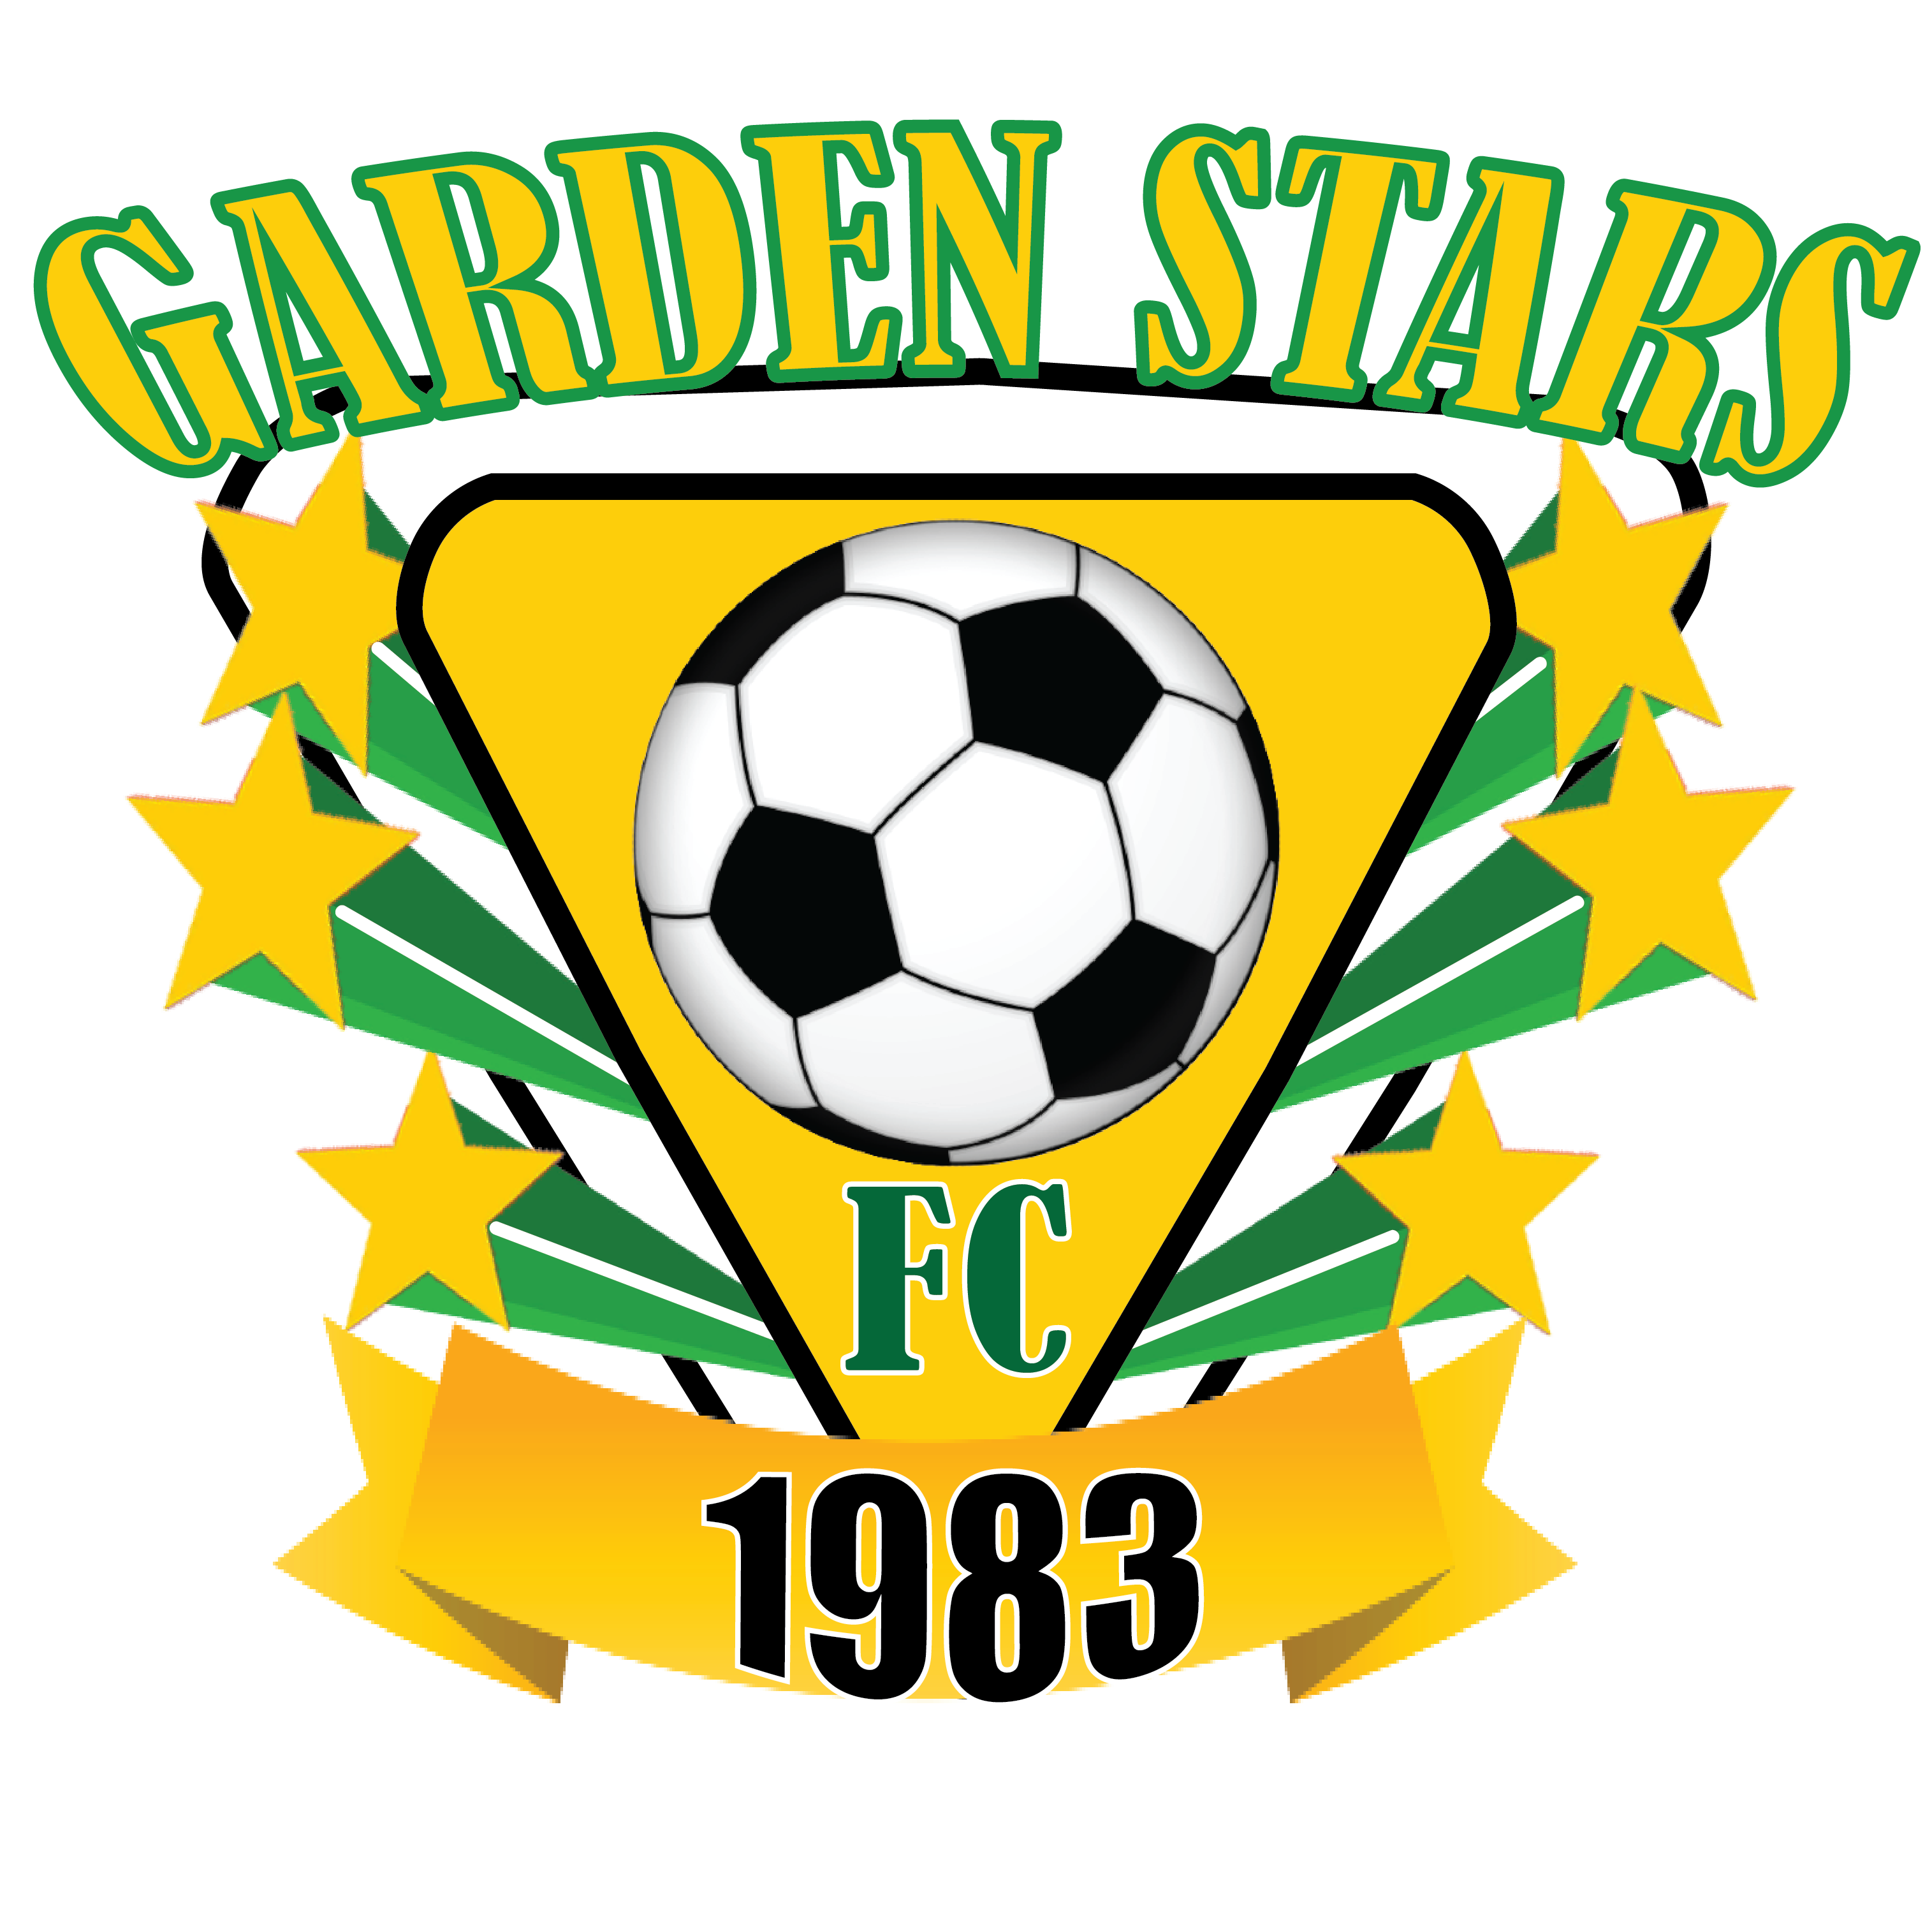 GARDEN STARS FC